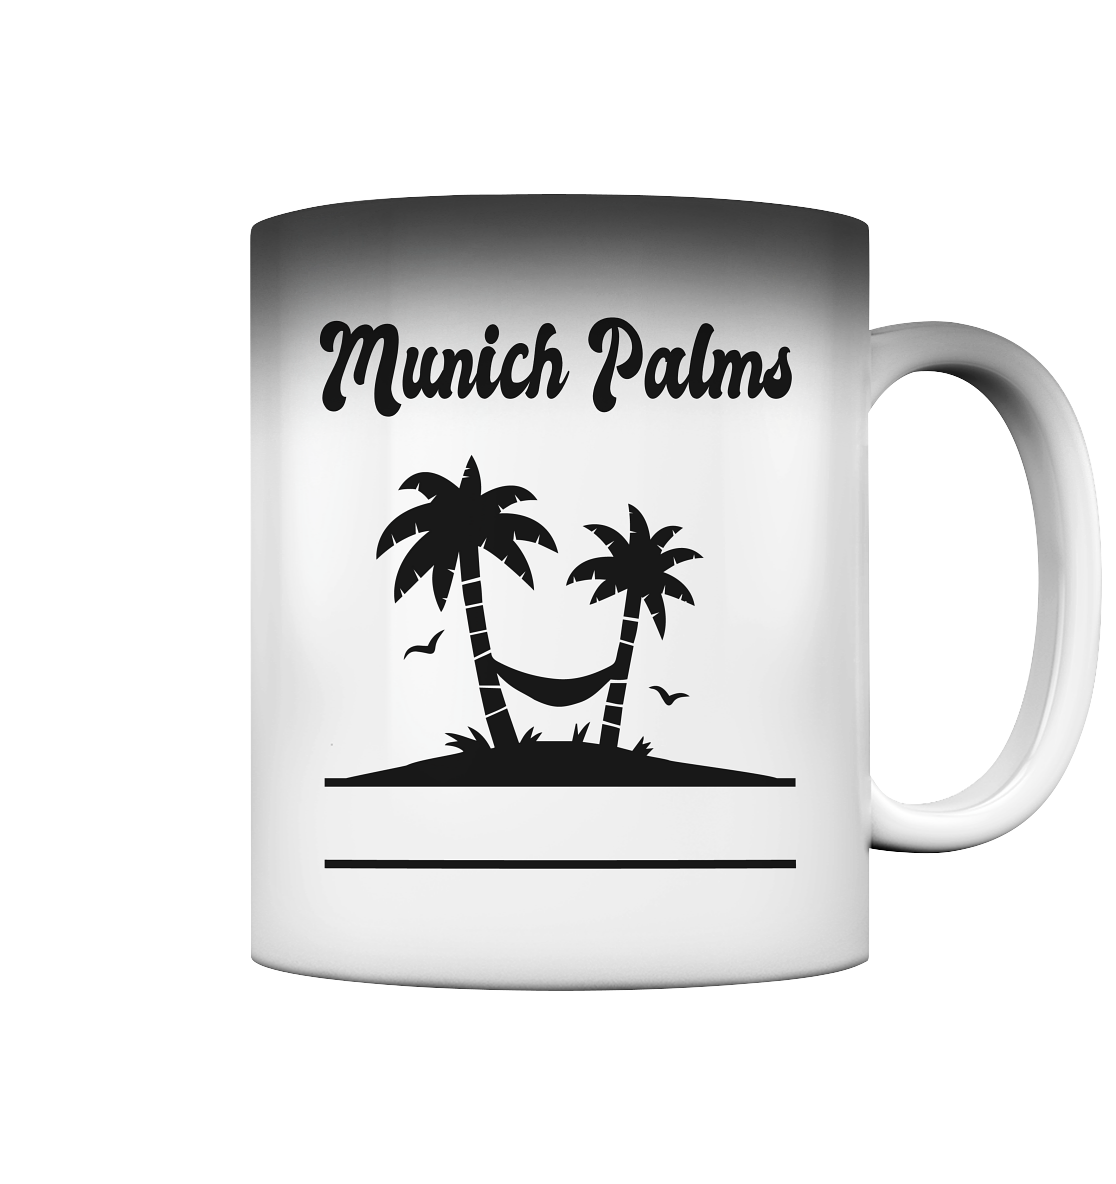 Design Munich Palms  - Magic Mug